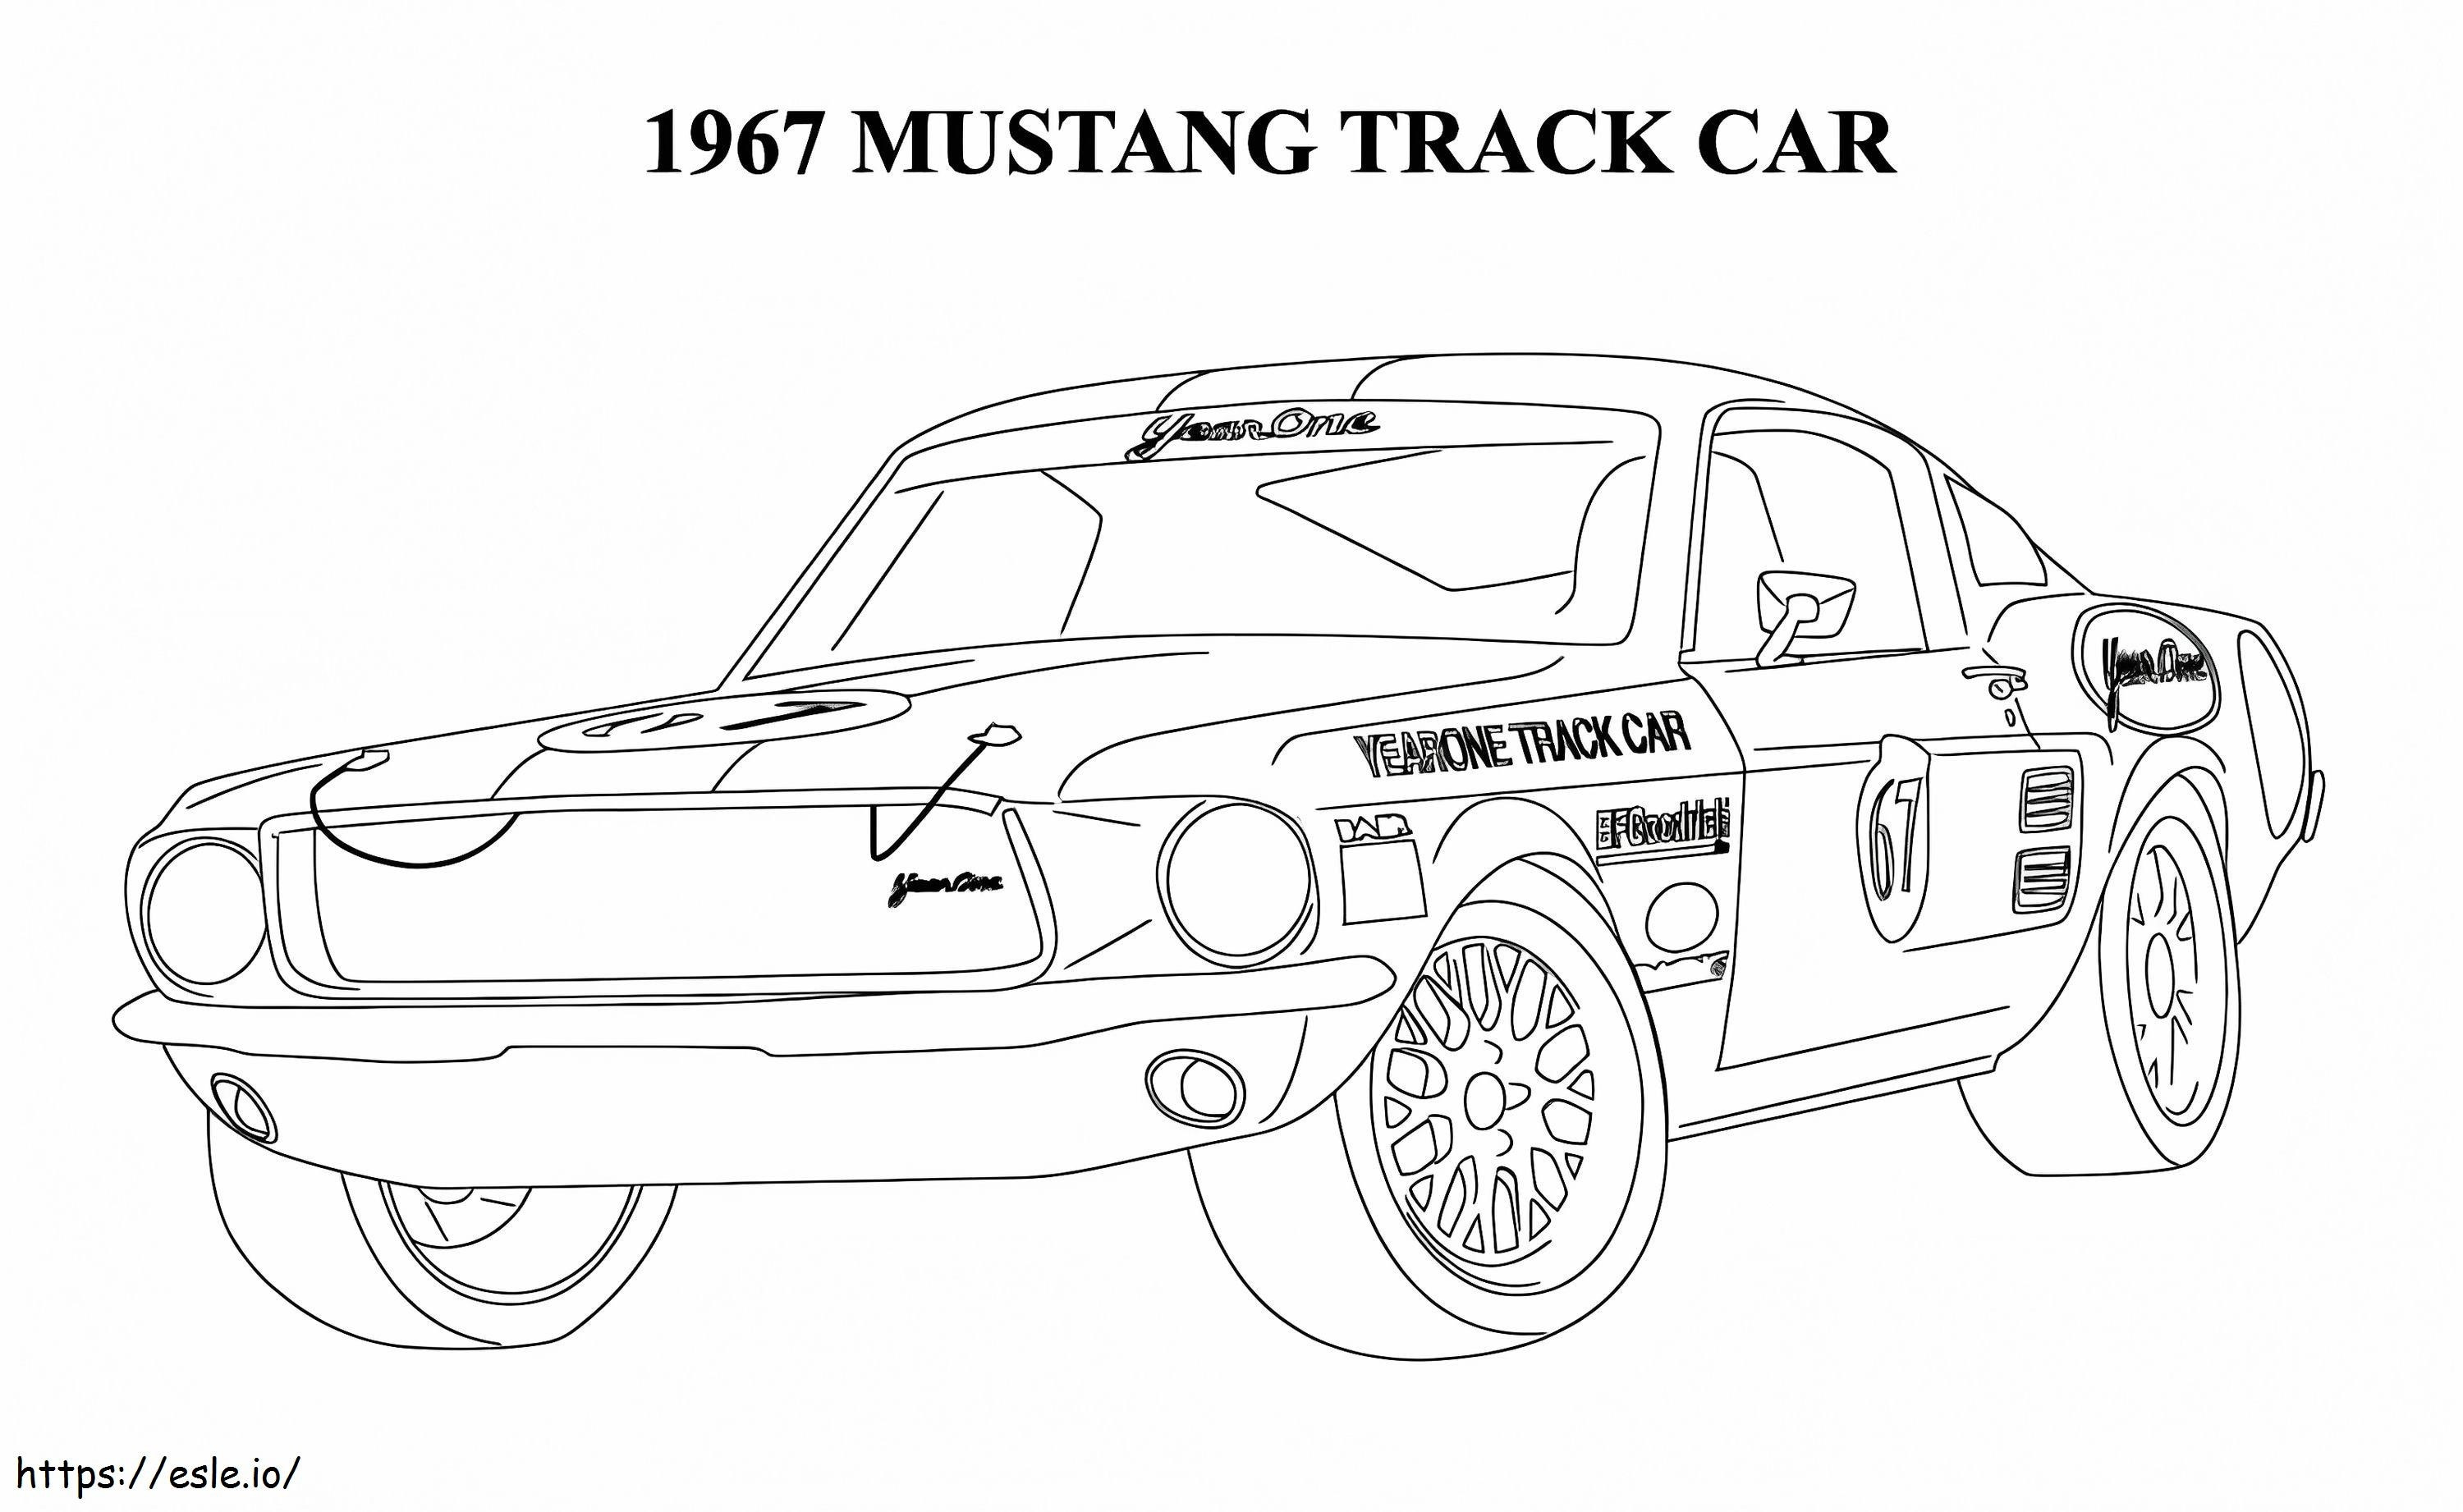  Mustang Track Car ausmalbilder